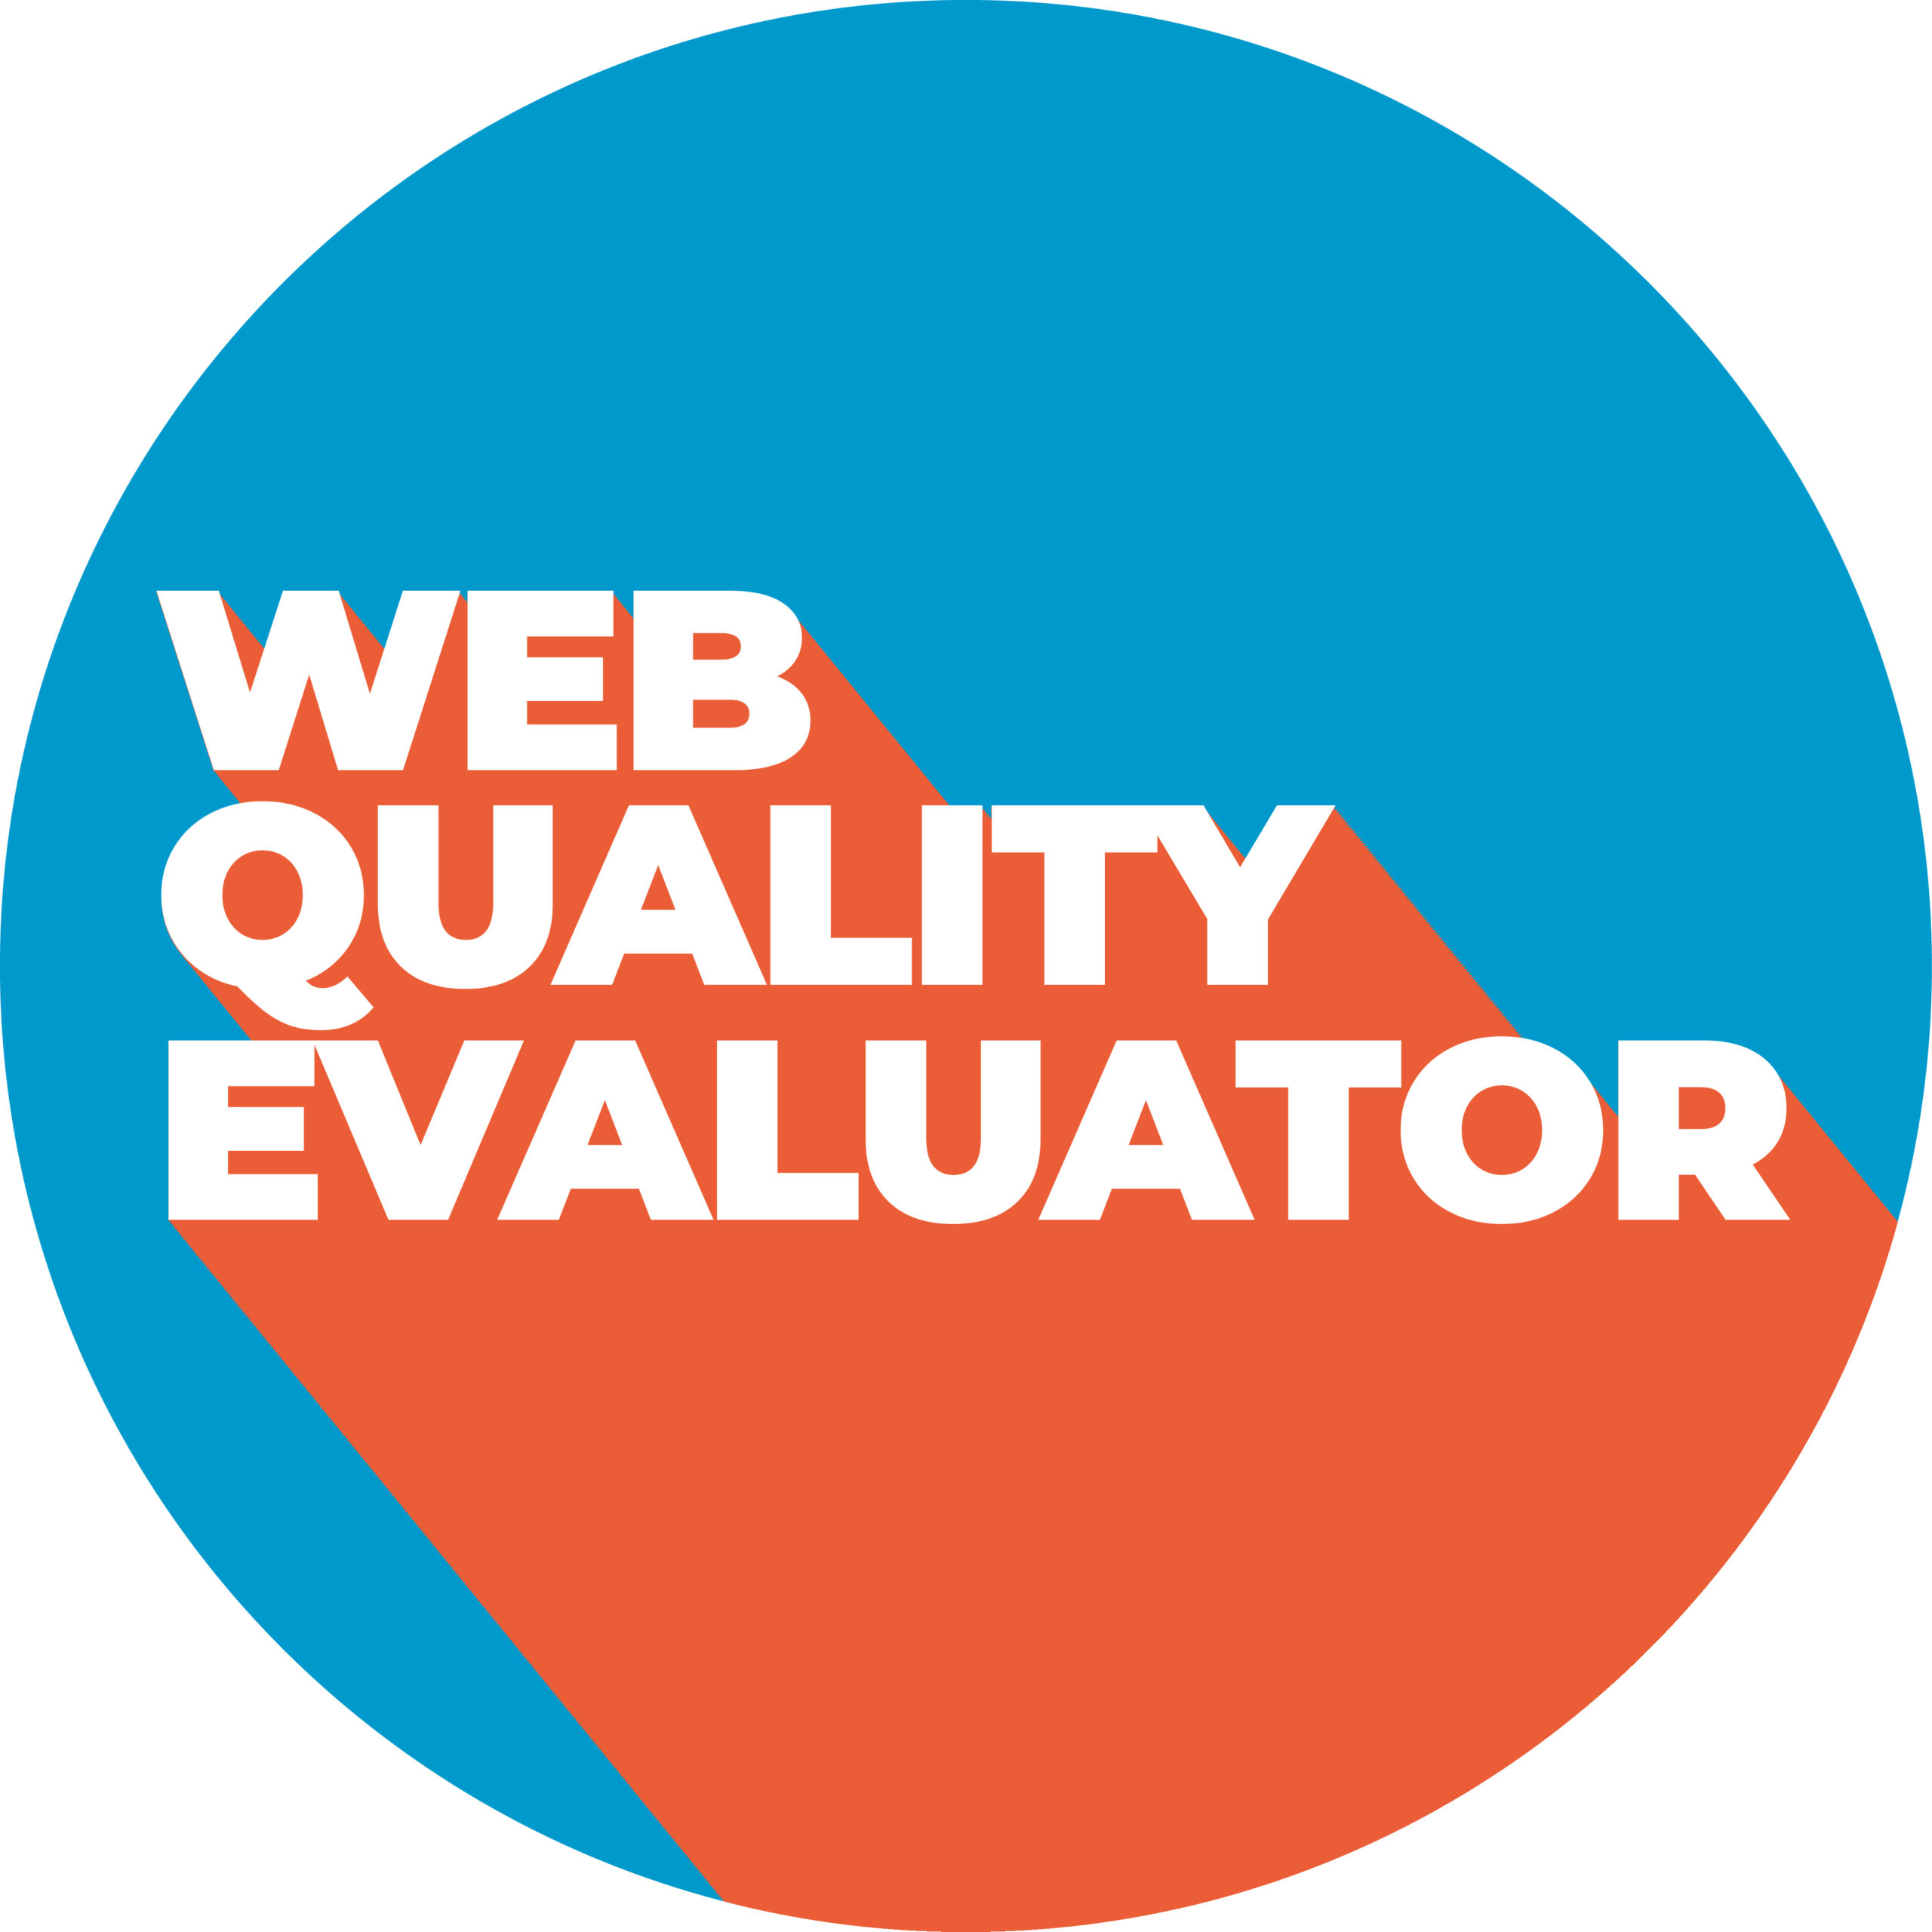 Web Quality Evaluator